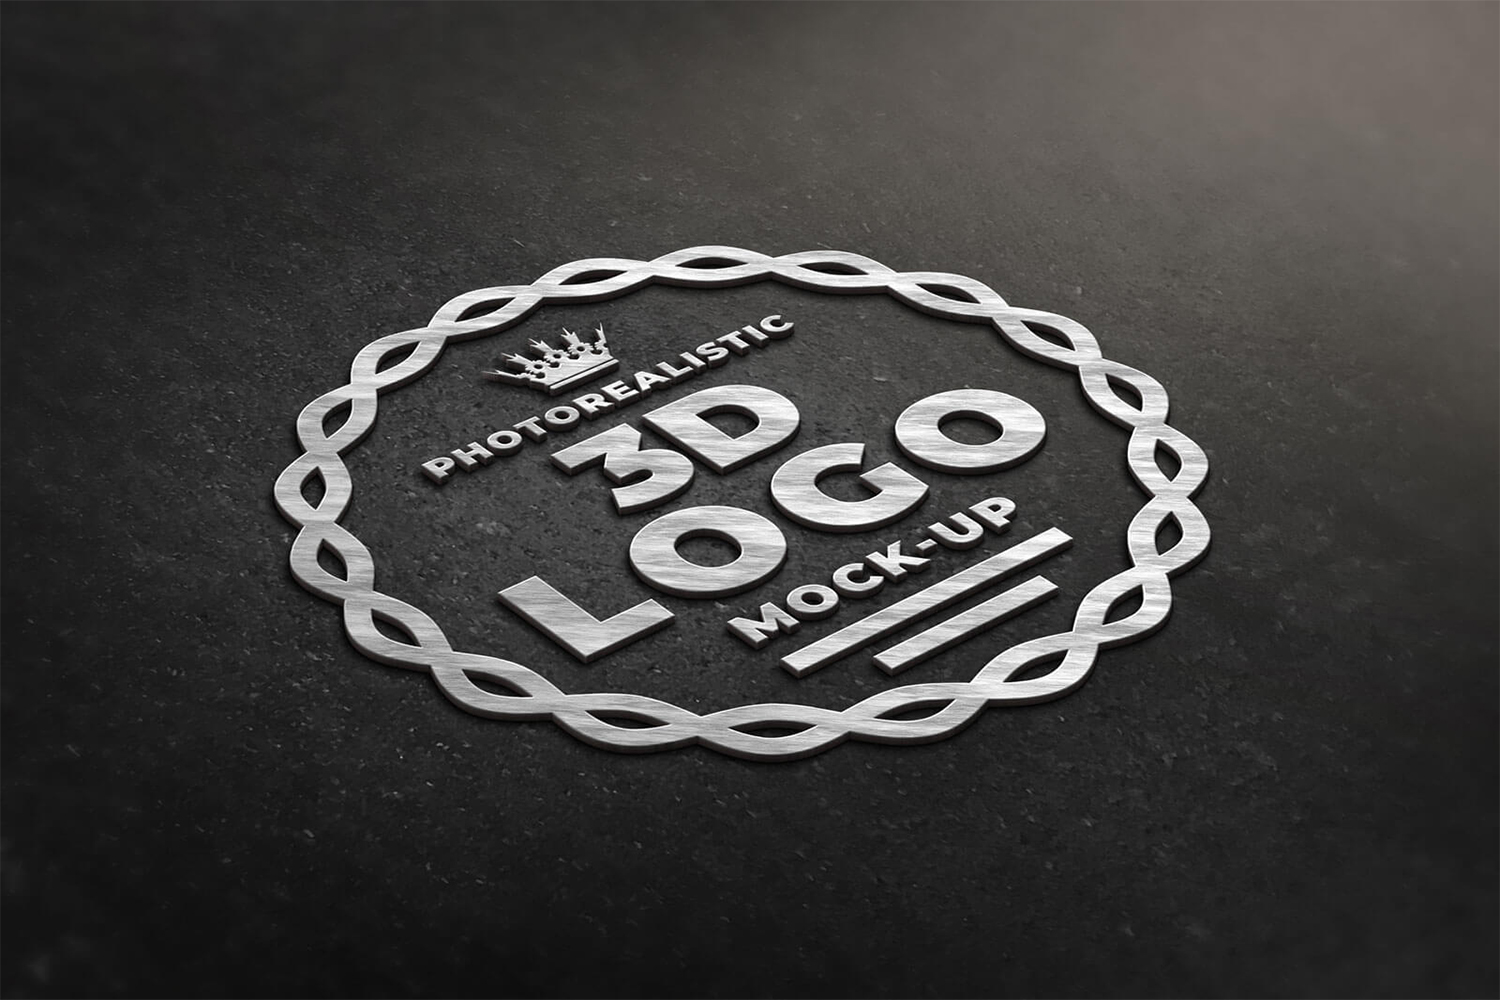 Photorealistic Steel 3D Logo Mockup PSD Free Download